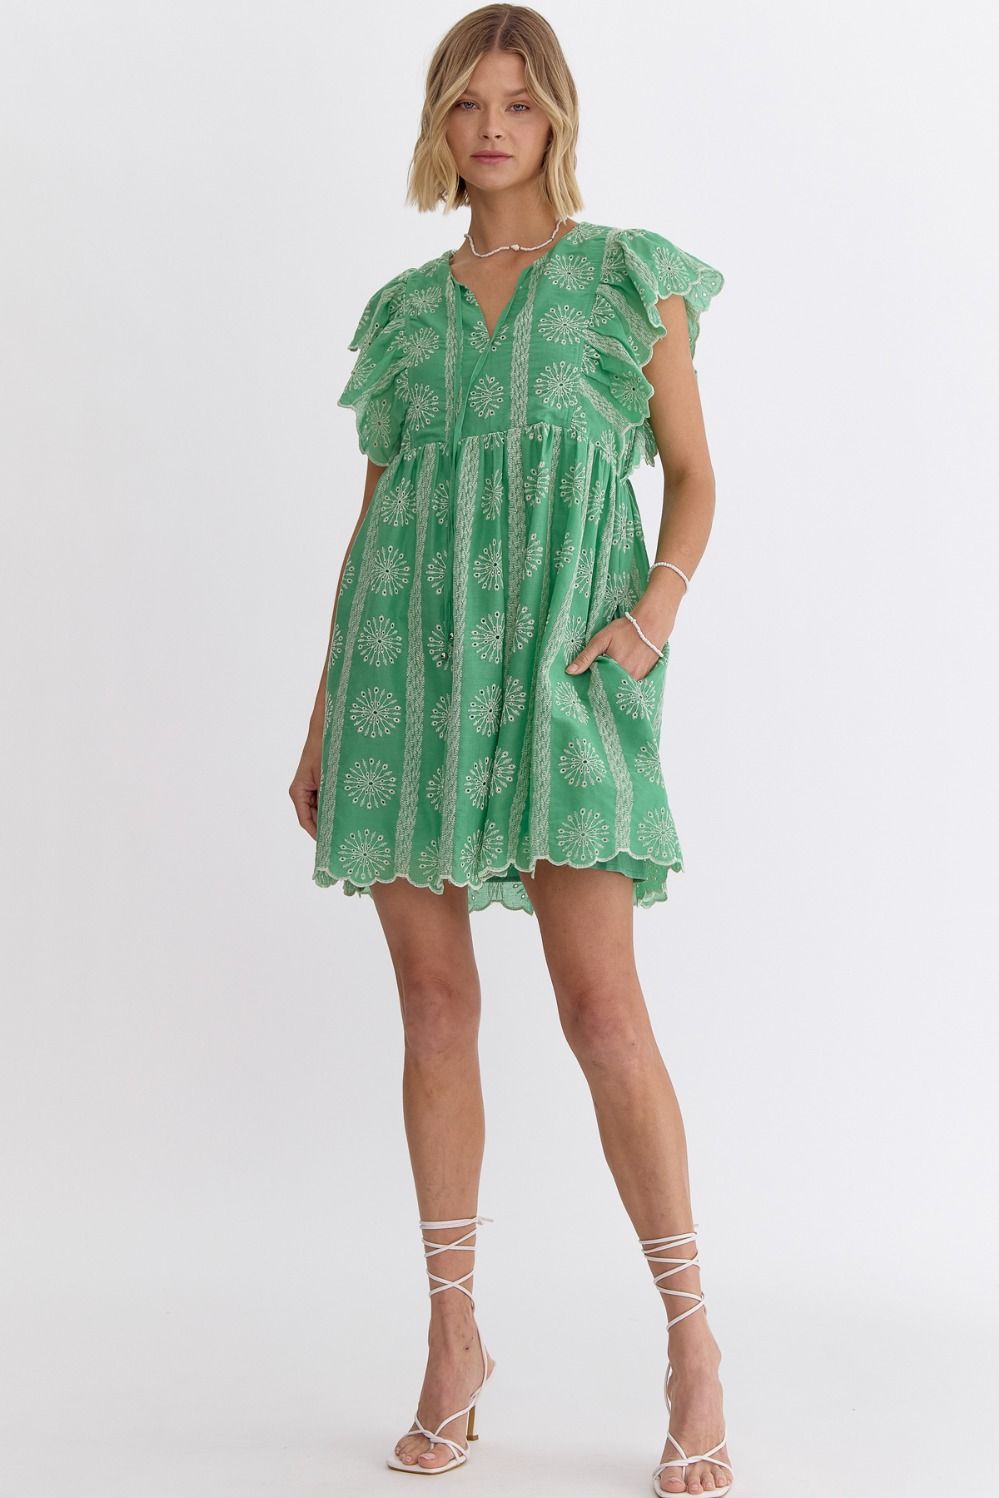 Apple Green Embroidered Sleeveless Dress